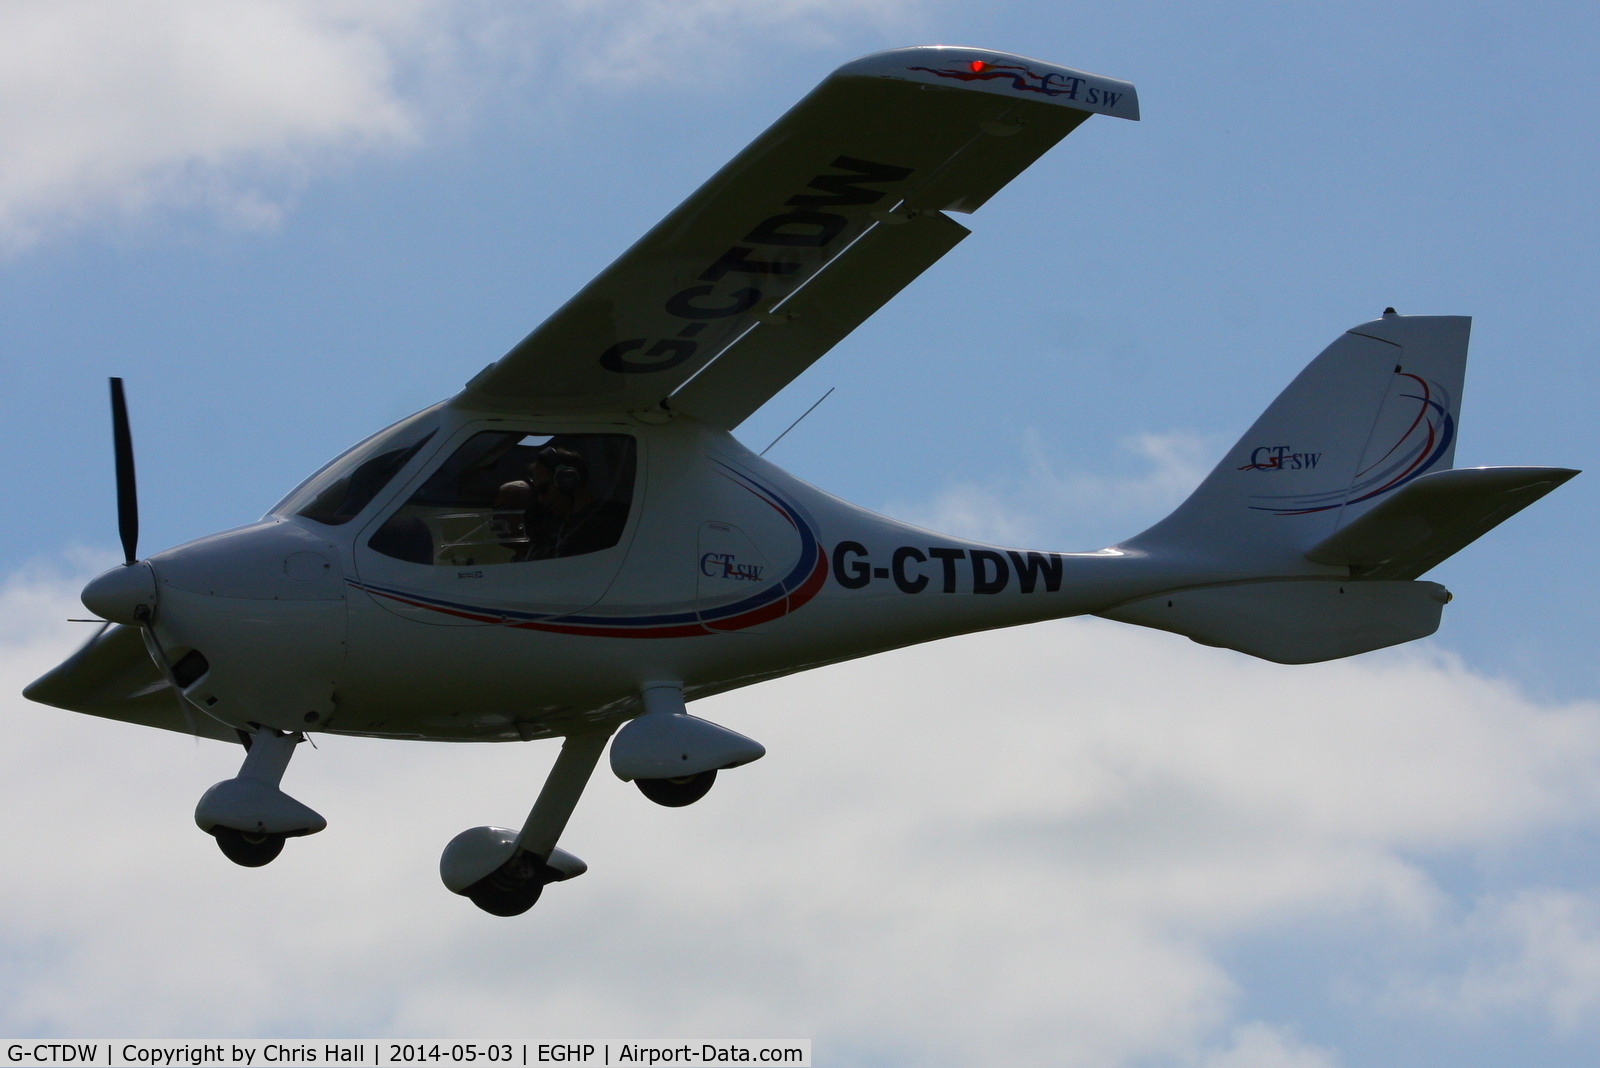 G-CTDW, 2007 Flight Design CTSW C/N 8295, at the 2014 Microlight Trade Fair, Popham